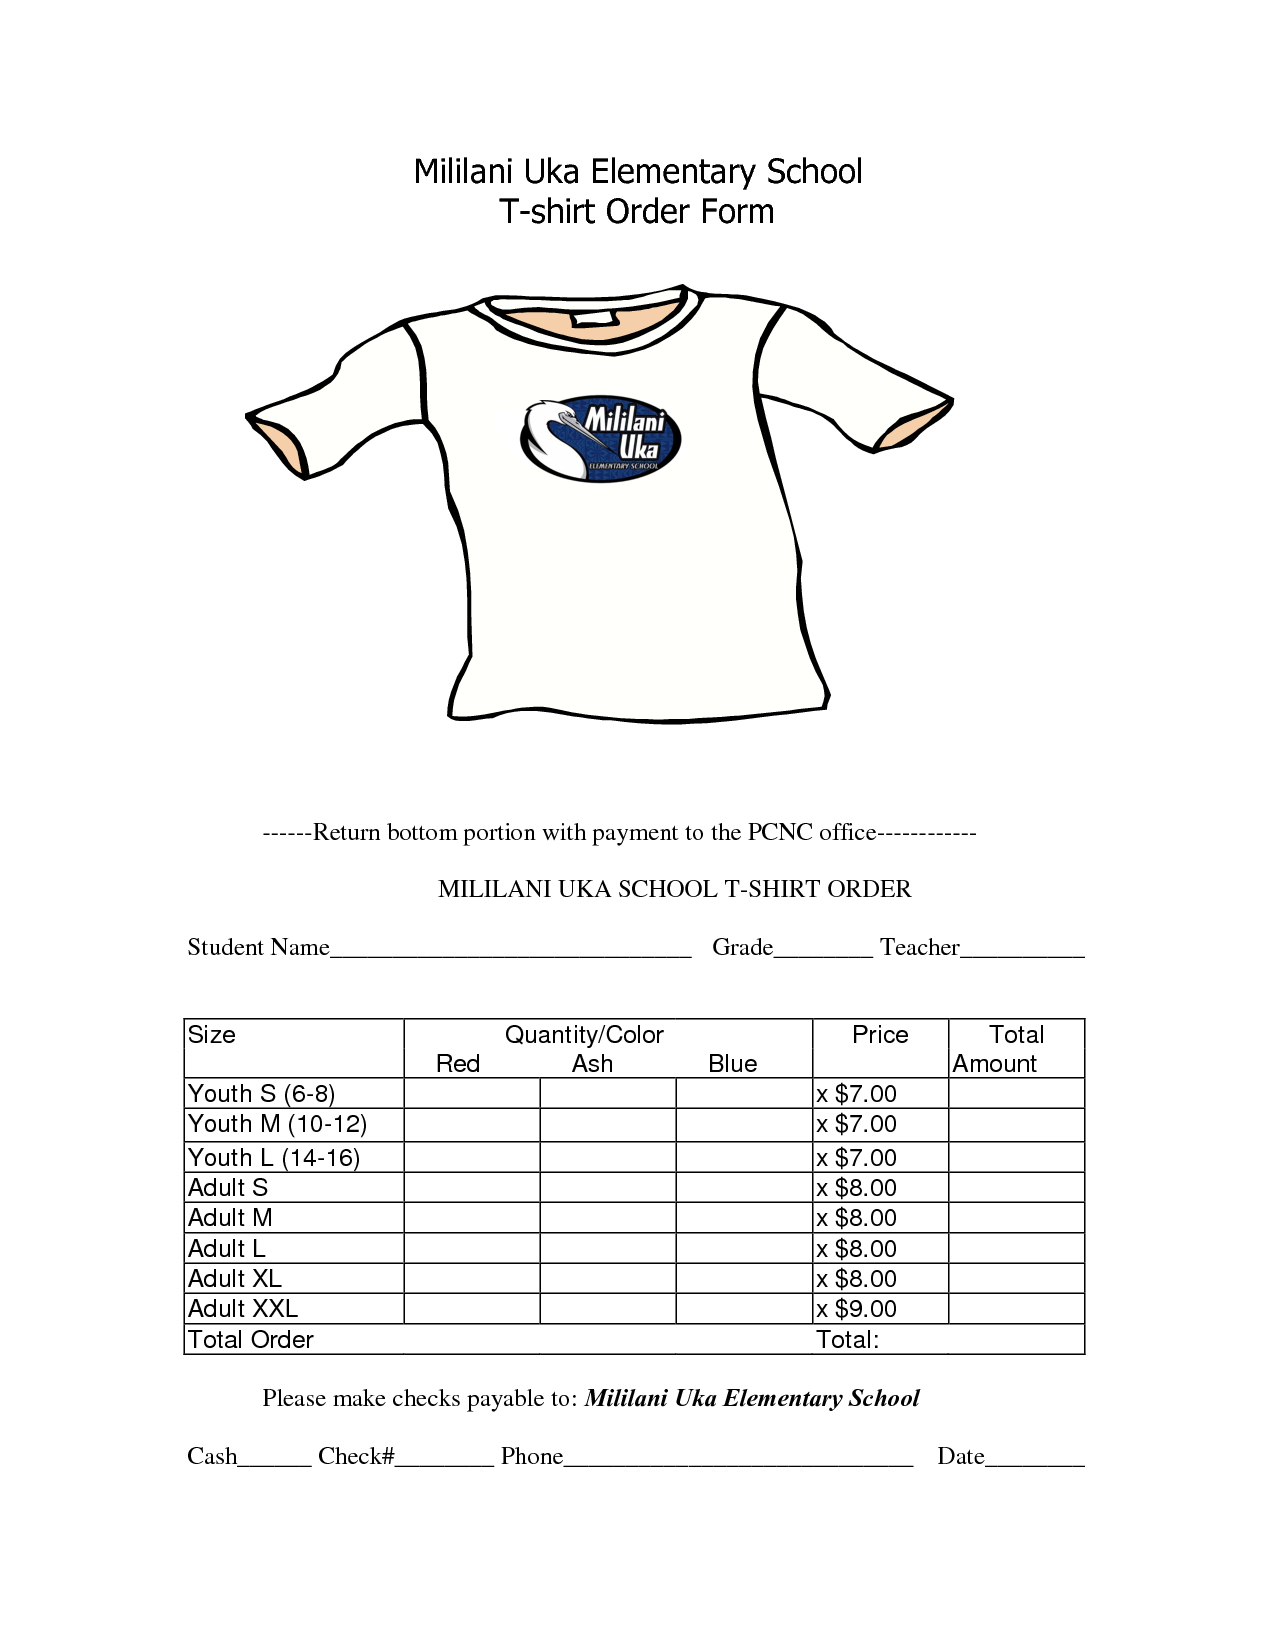 School T Shirt Order Form Template | Order Form Template With Blank T Shirt Order Form Template